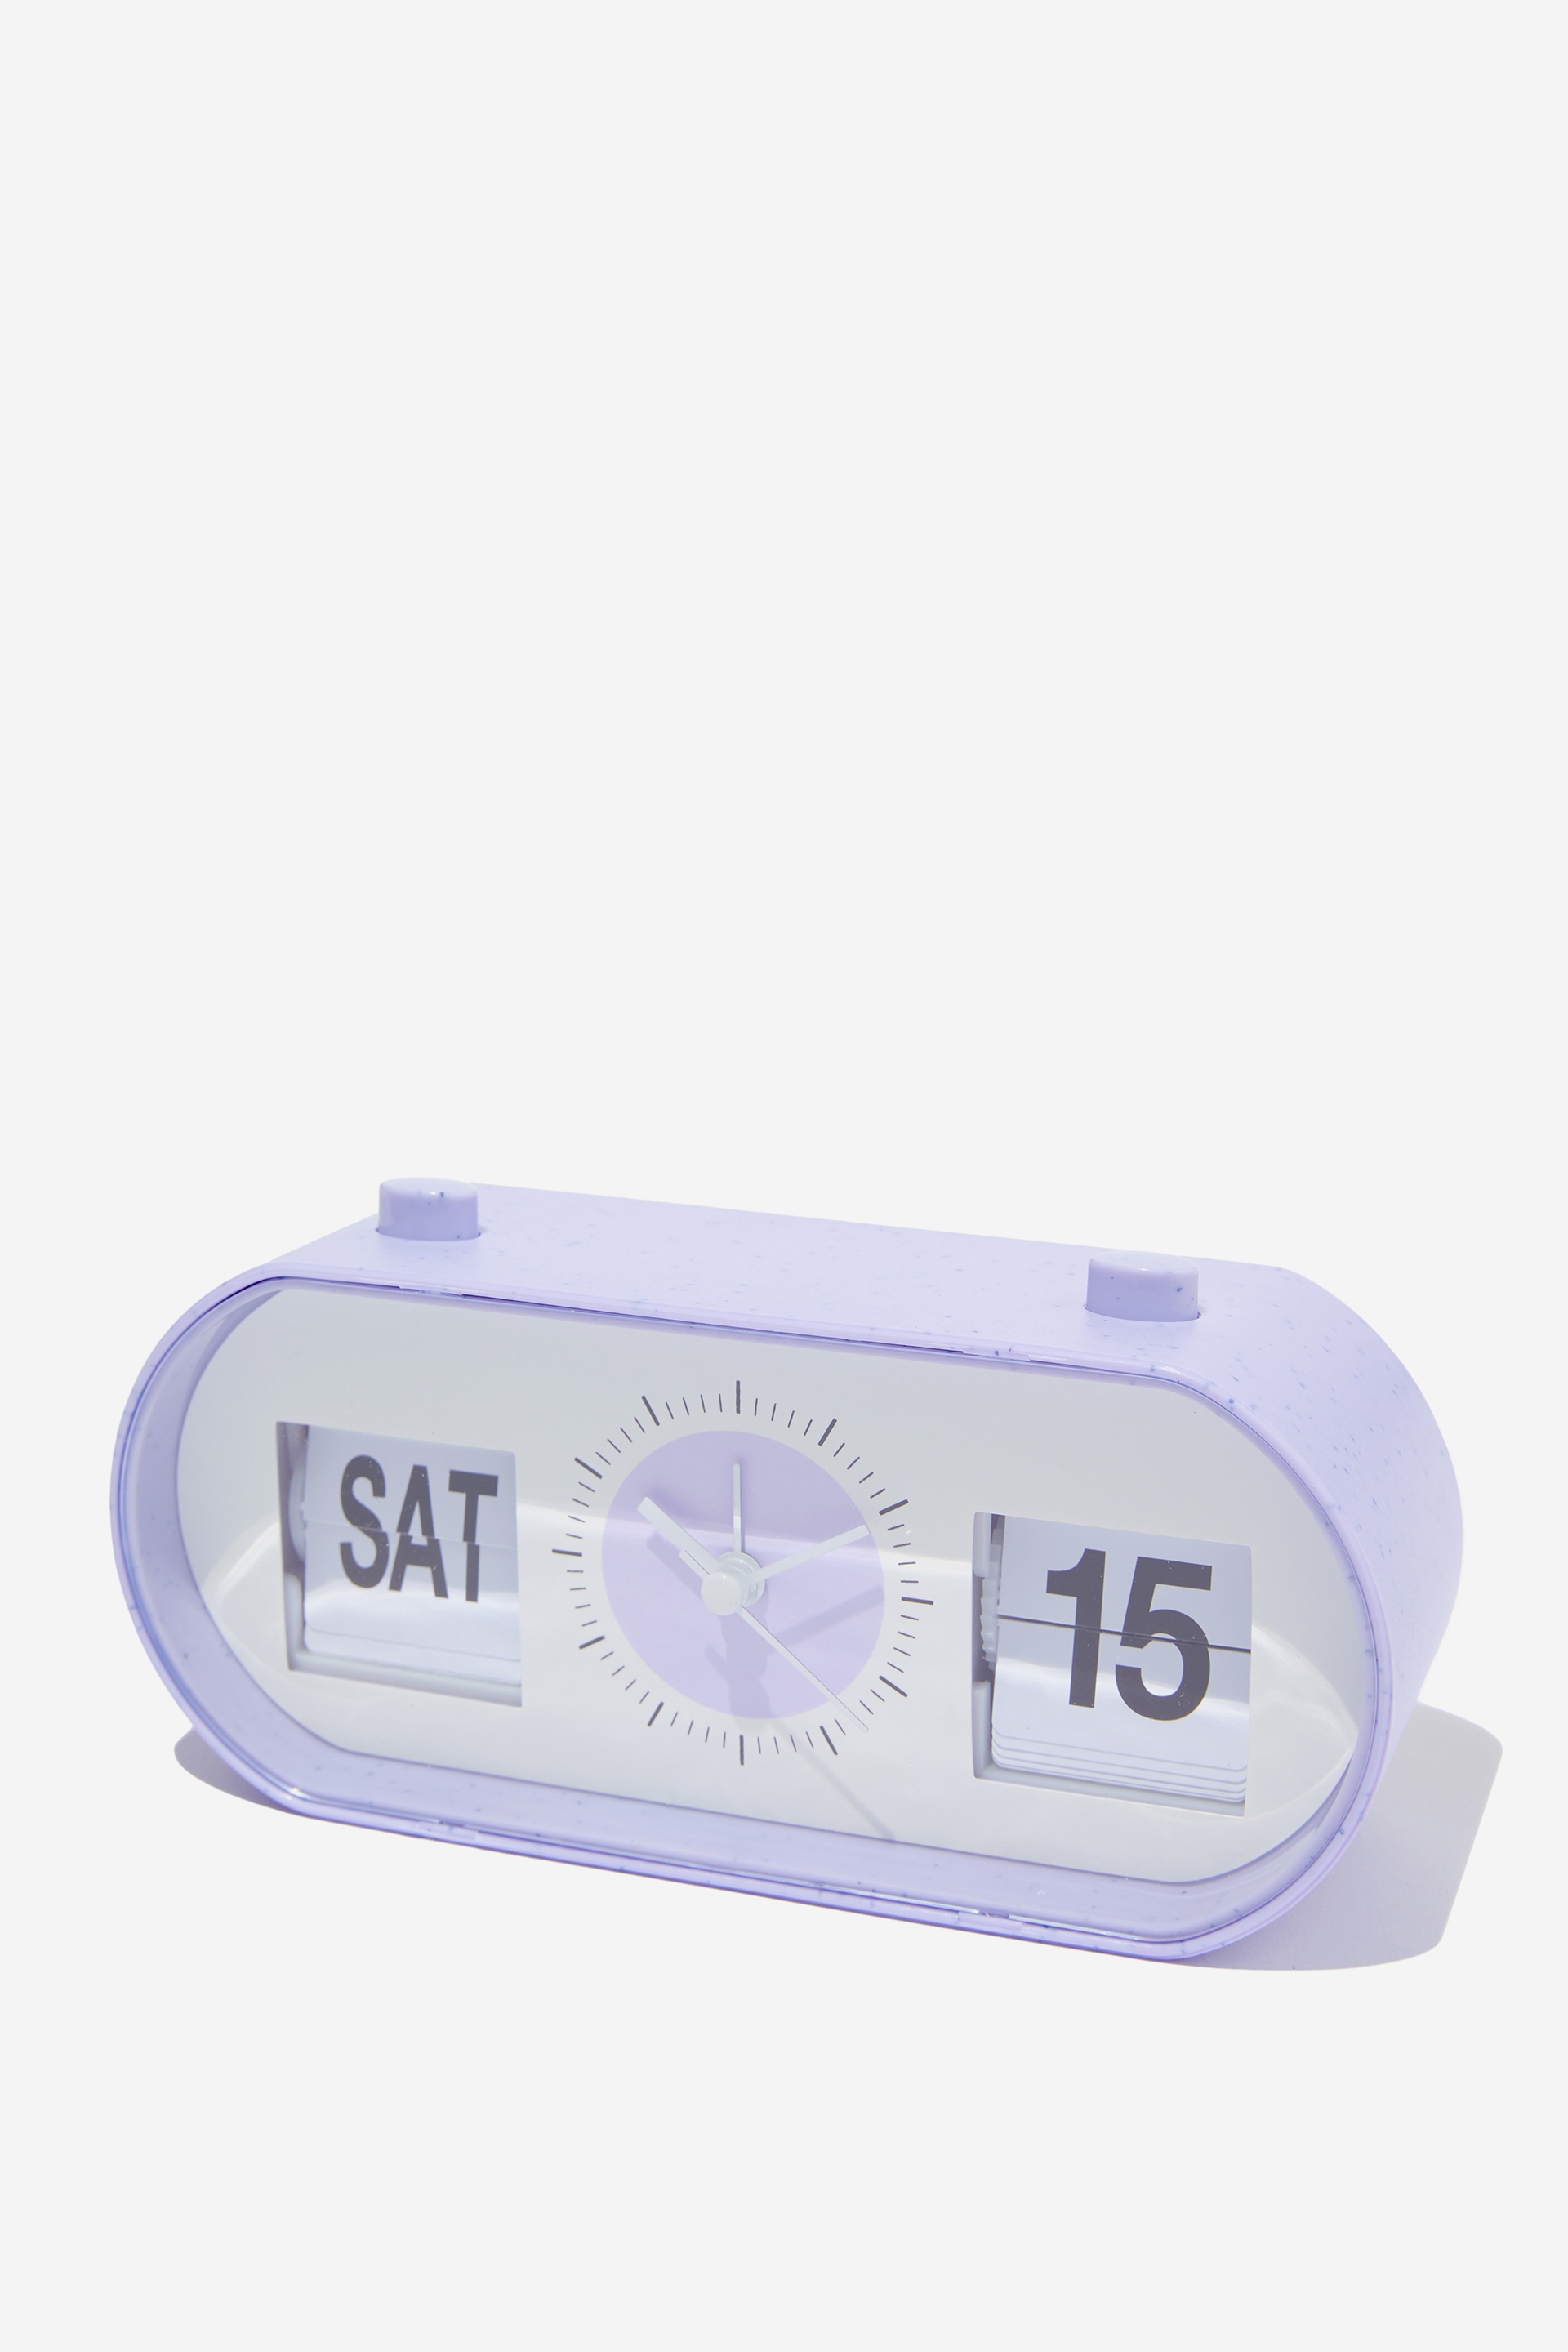 Typo - Flip Clock V2.0 - Soft lilac speckle